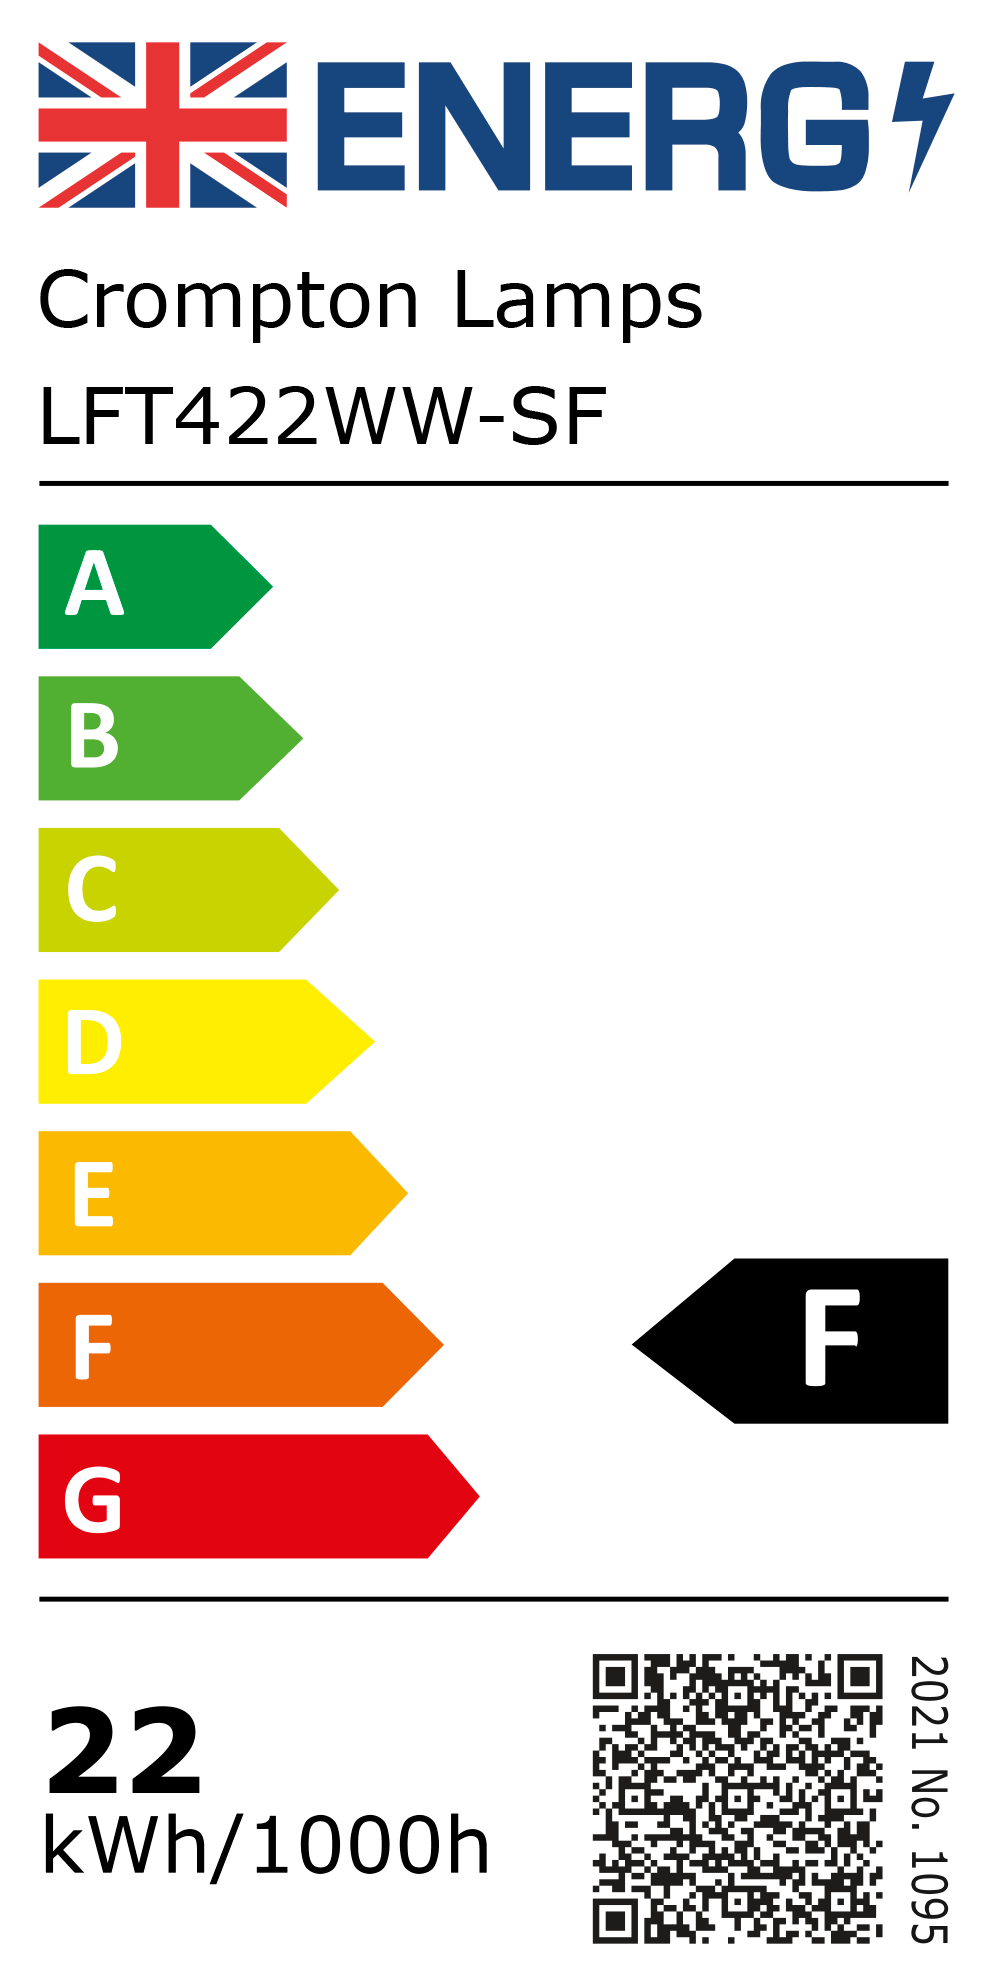 New 2021 Energy Rating Label: MPN LFT422WW-SF